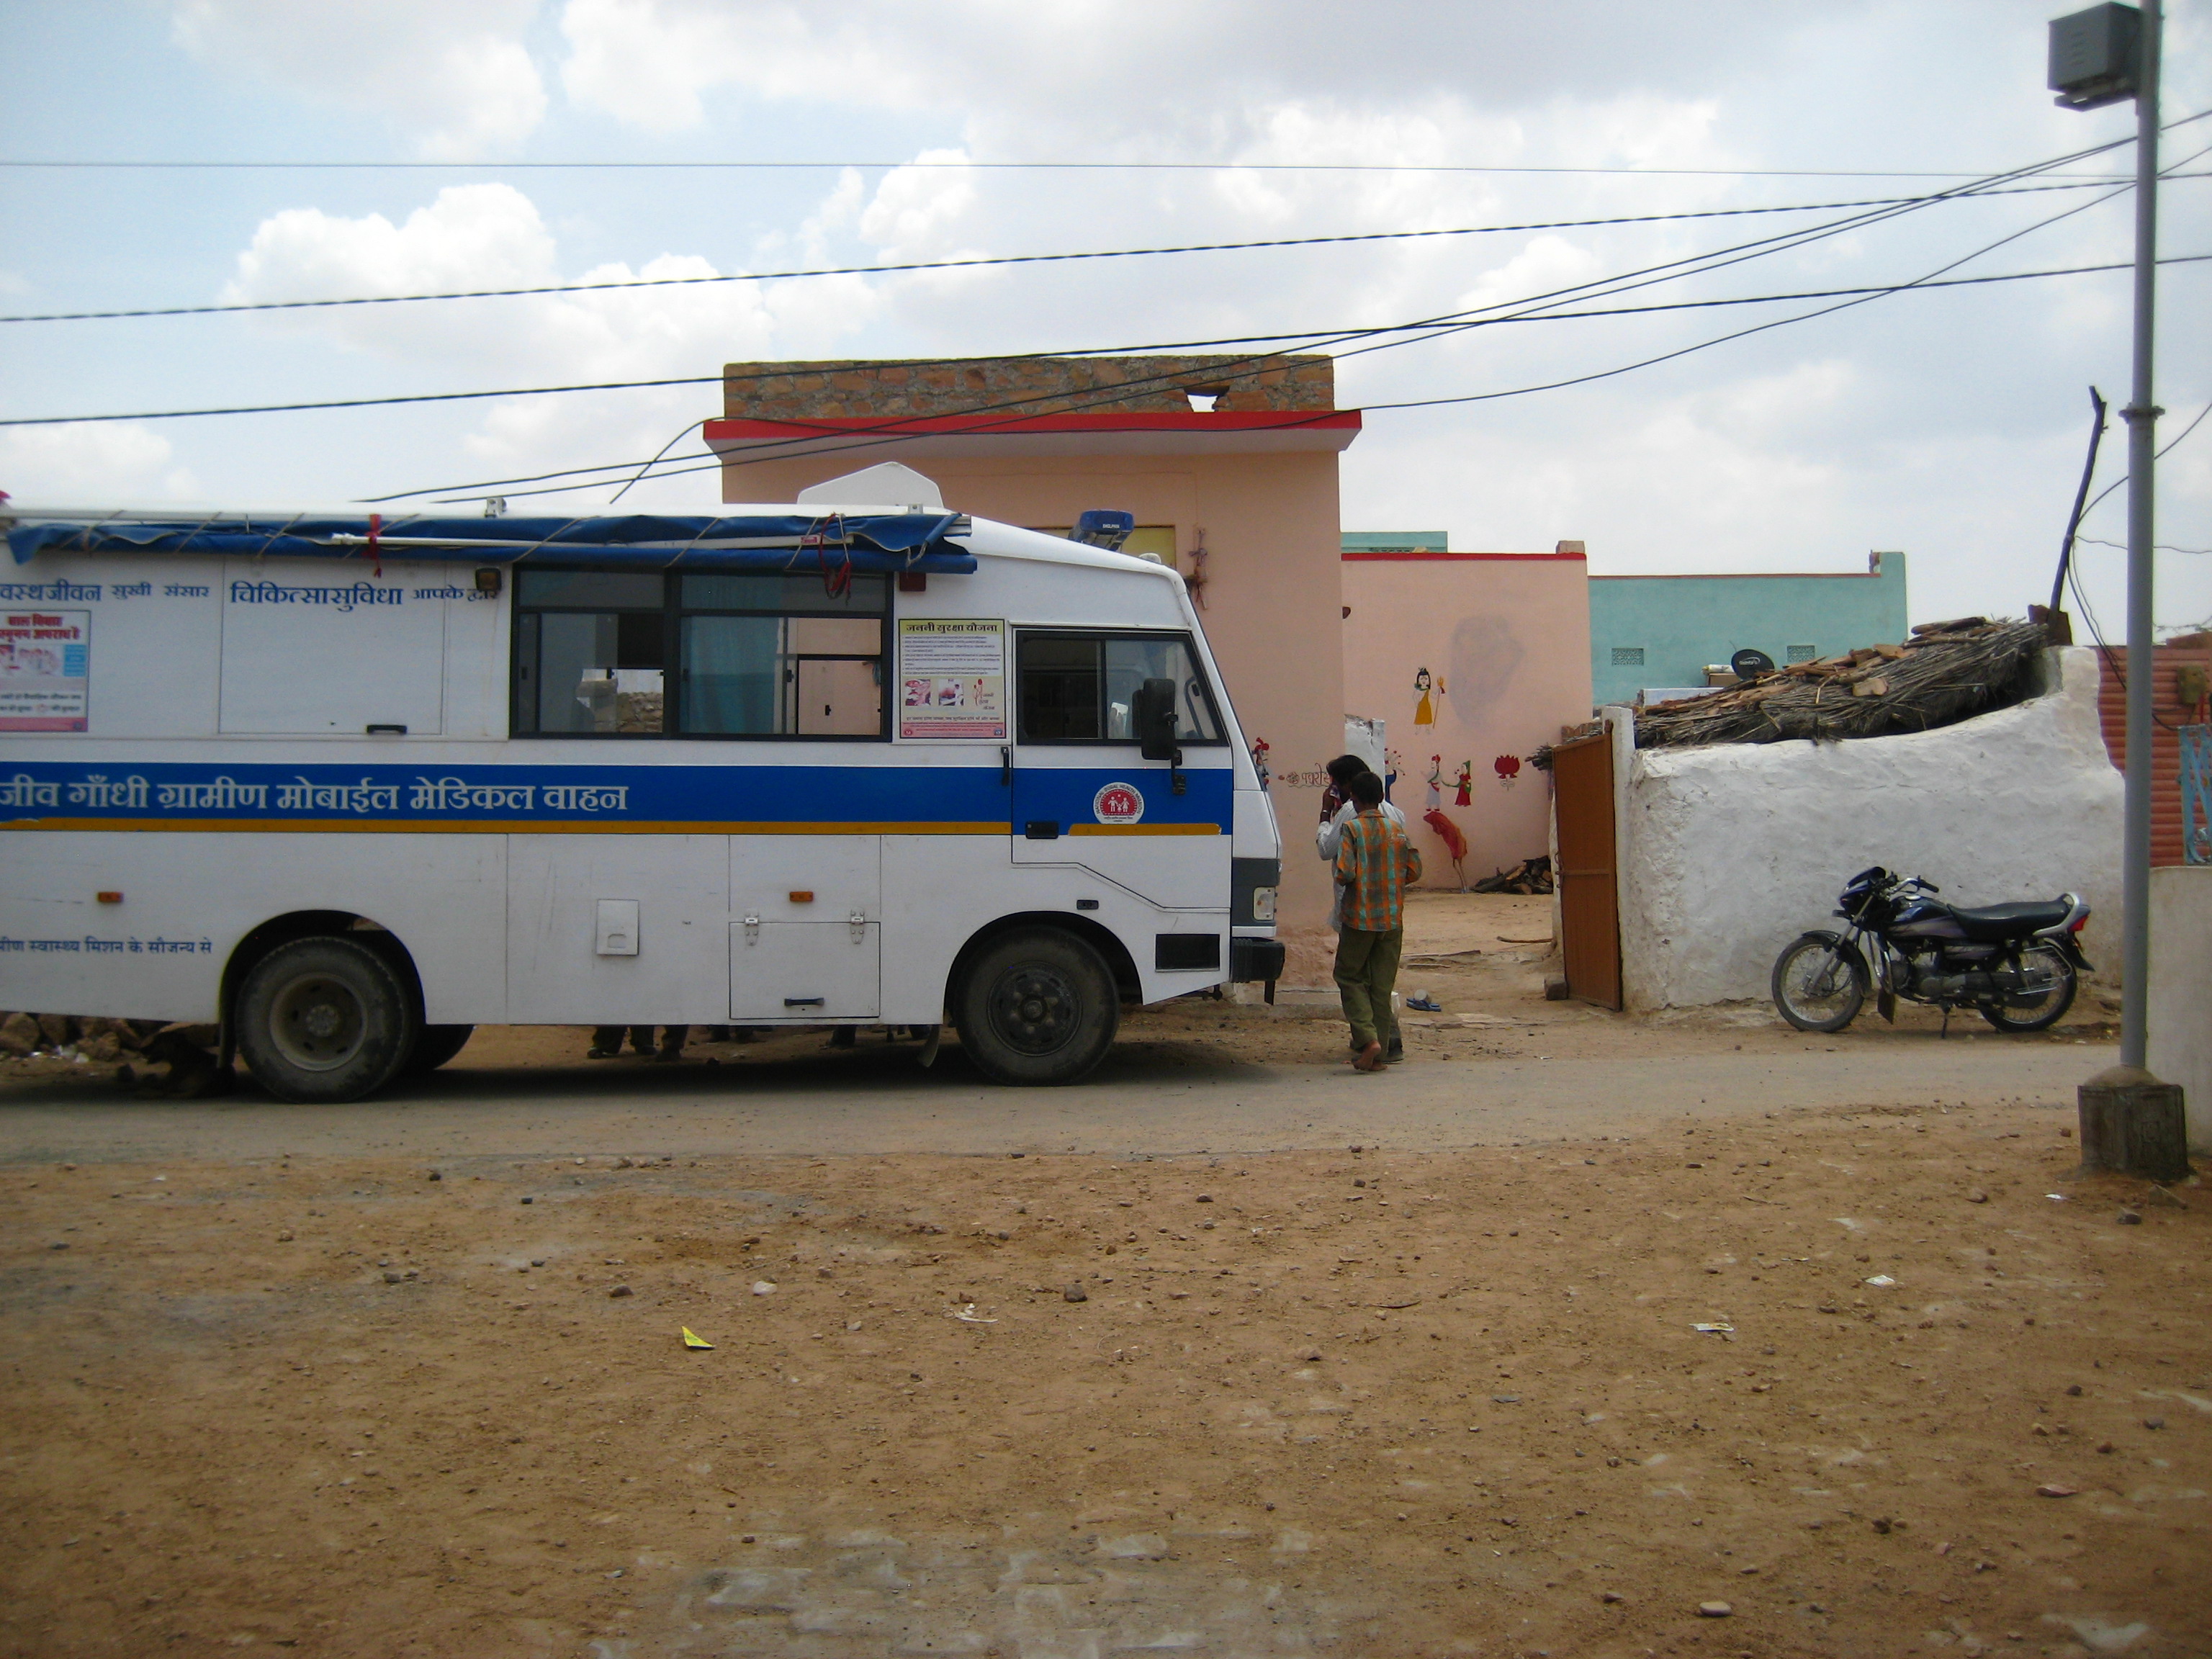 Mobile medical van on village street